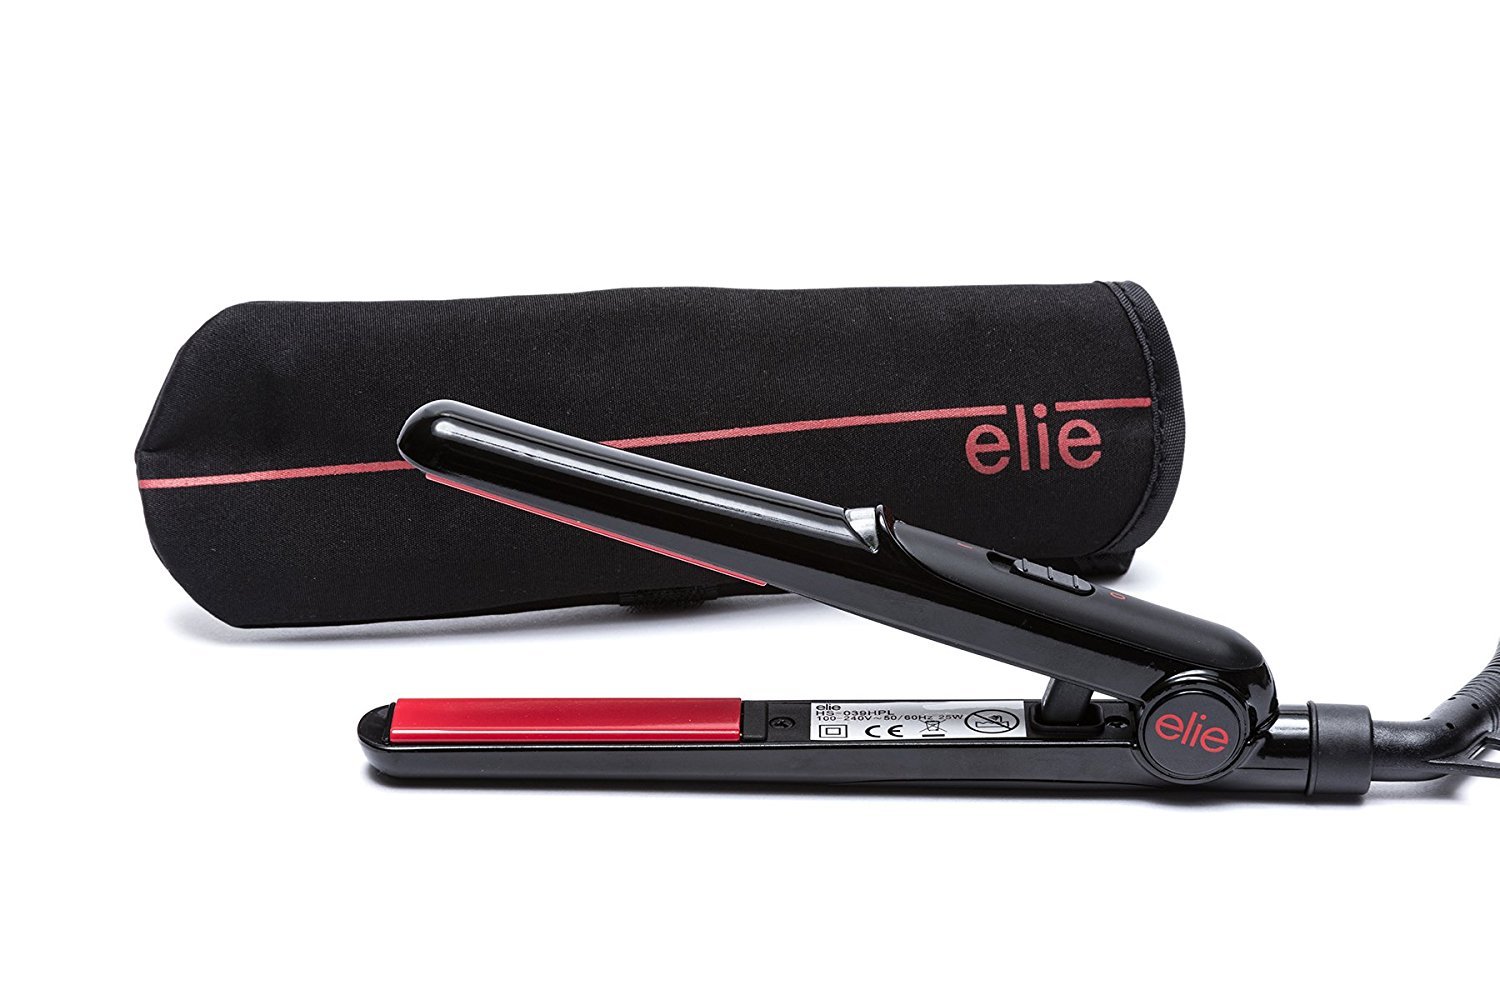 The Elle Black Travel Hair Straighteners